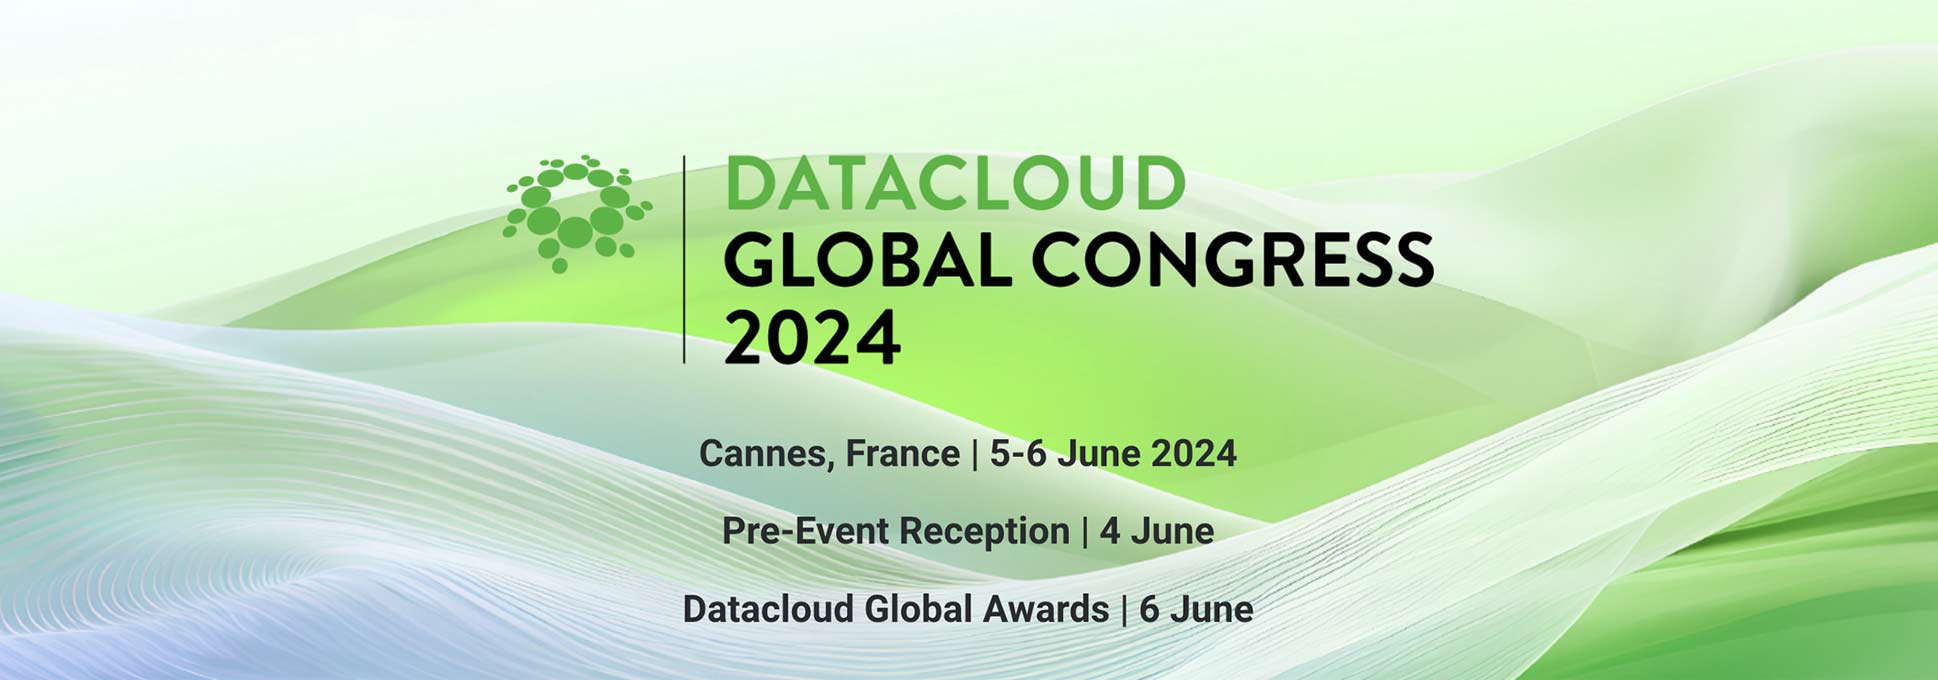 Datacloud Global Congress Cannes 2024